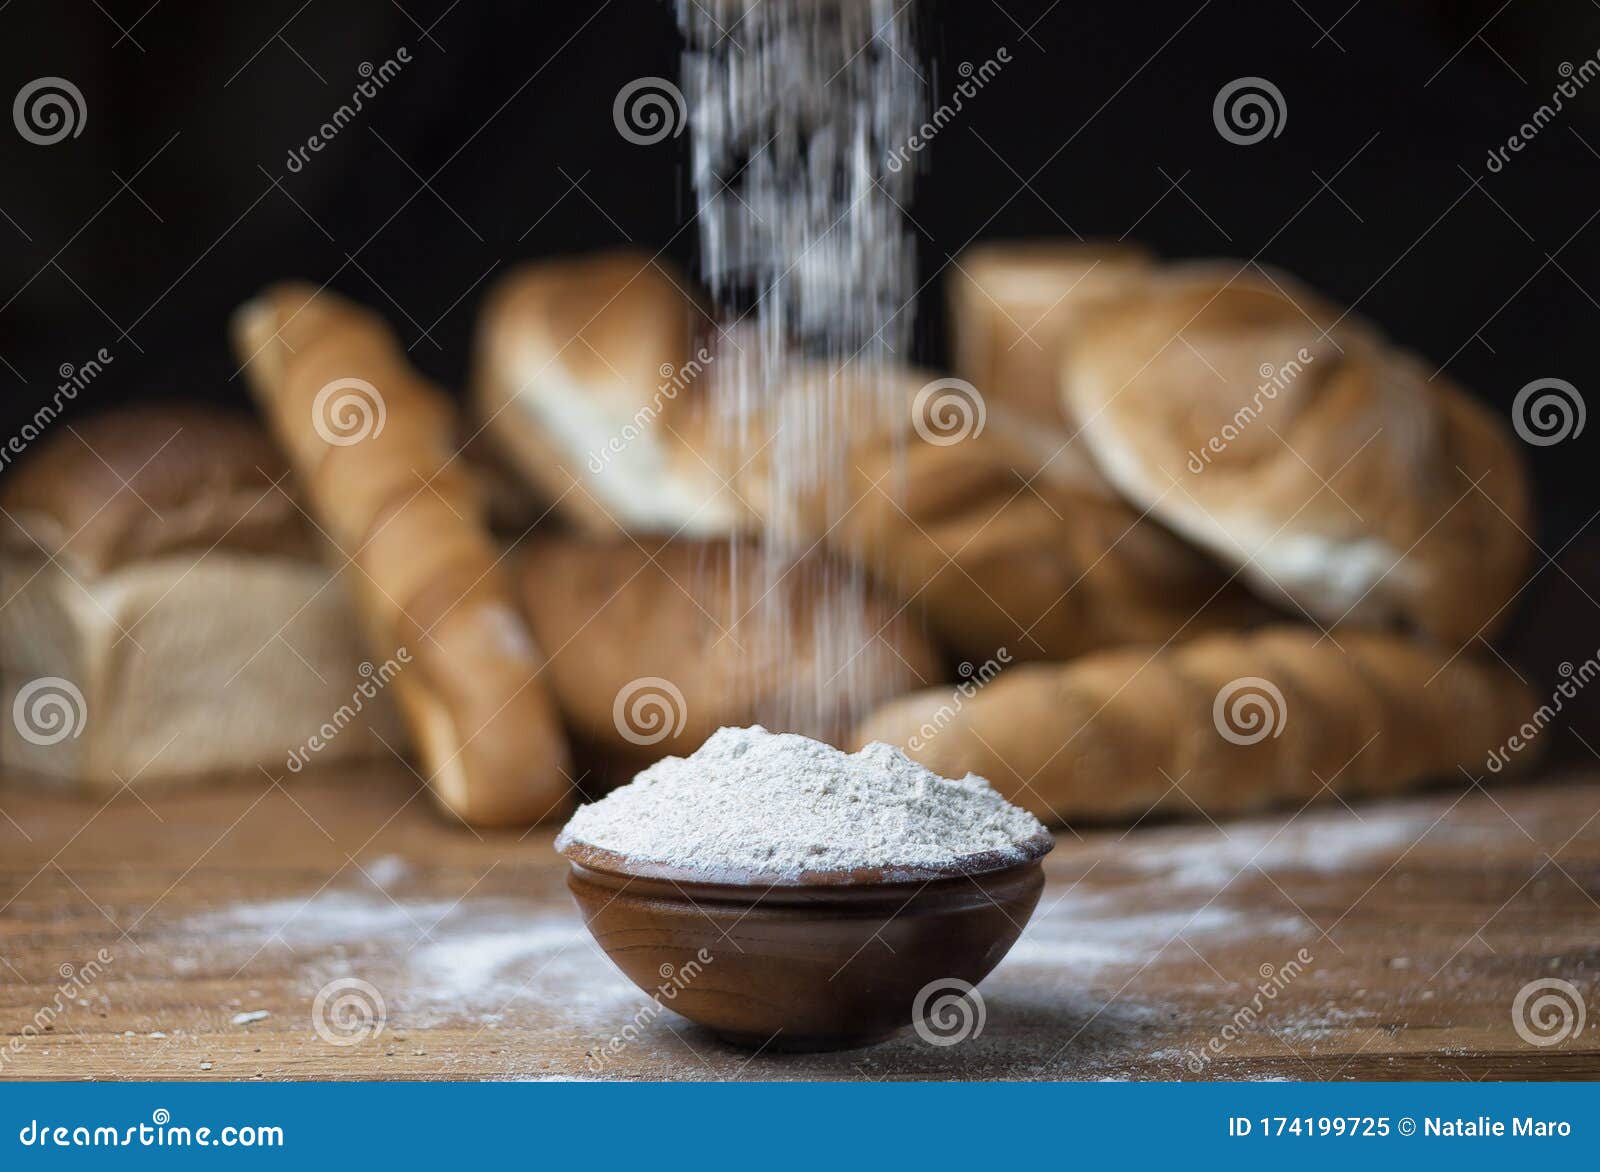 Cuillère de farine versée dans un bol foto de Stock